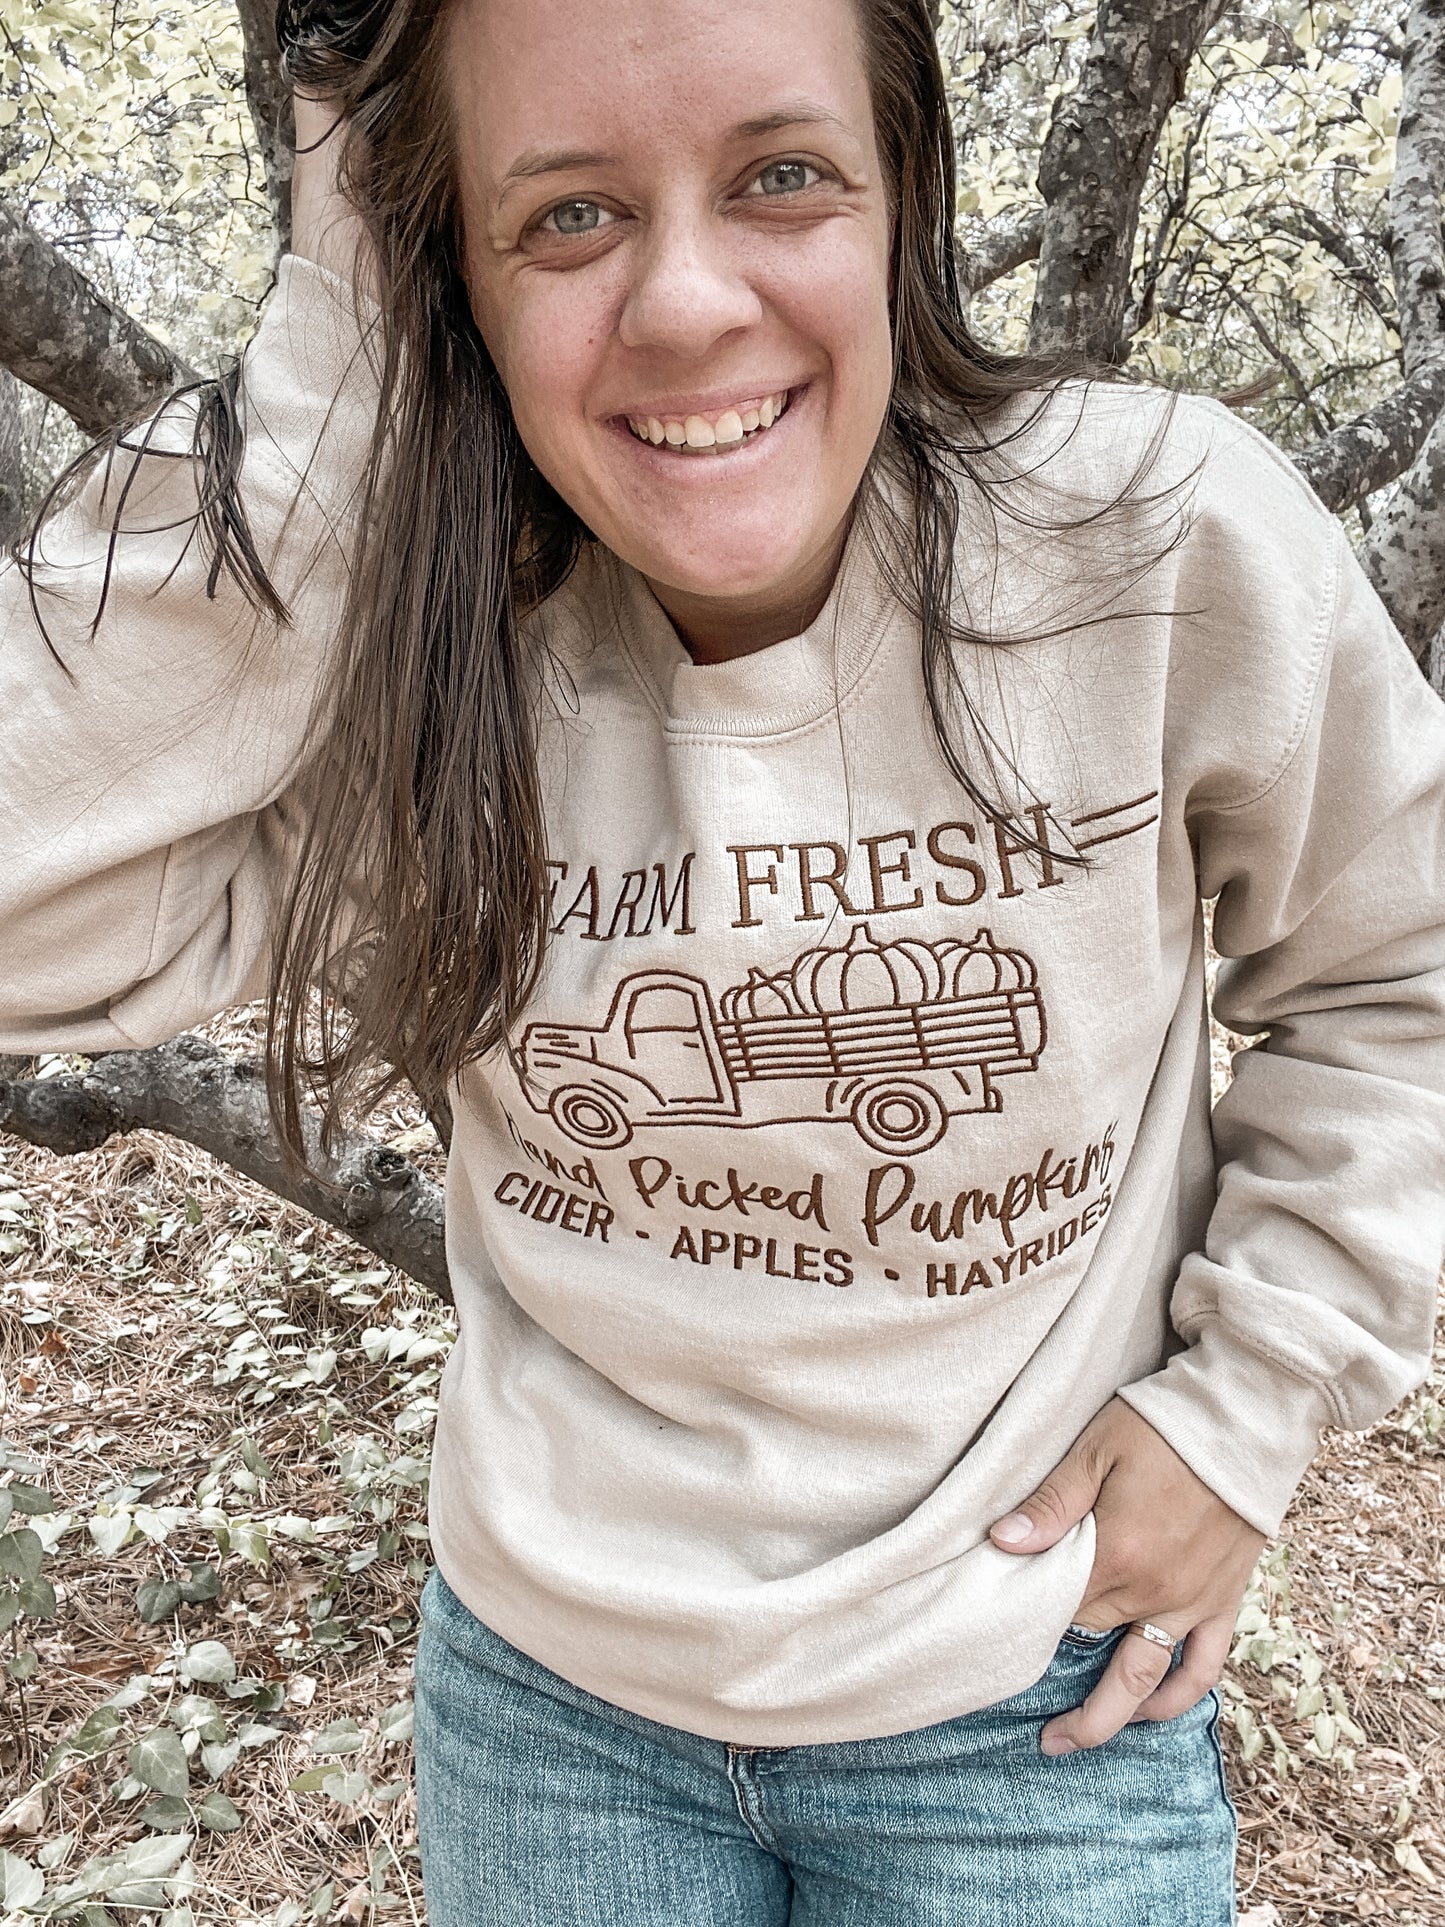 Farm Fresh Hand Picked Pumpkins Sweatshirt | Embroidered Apparel